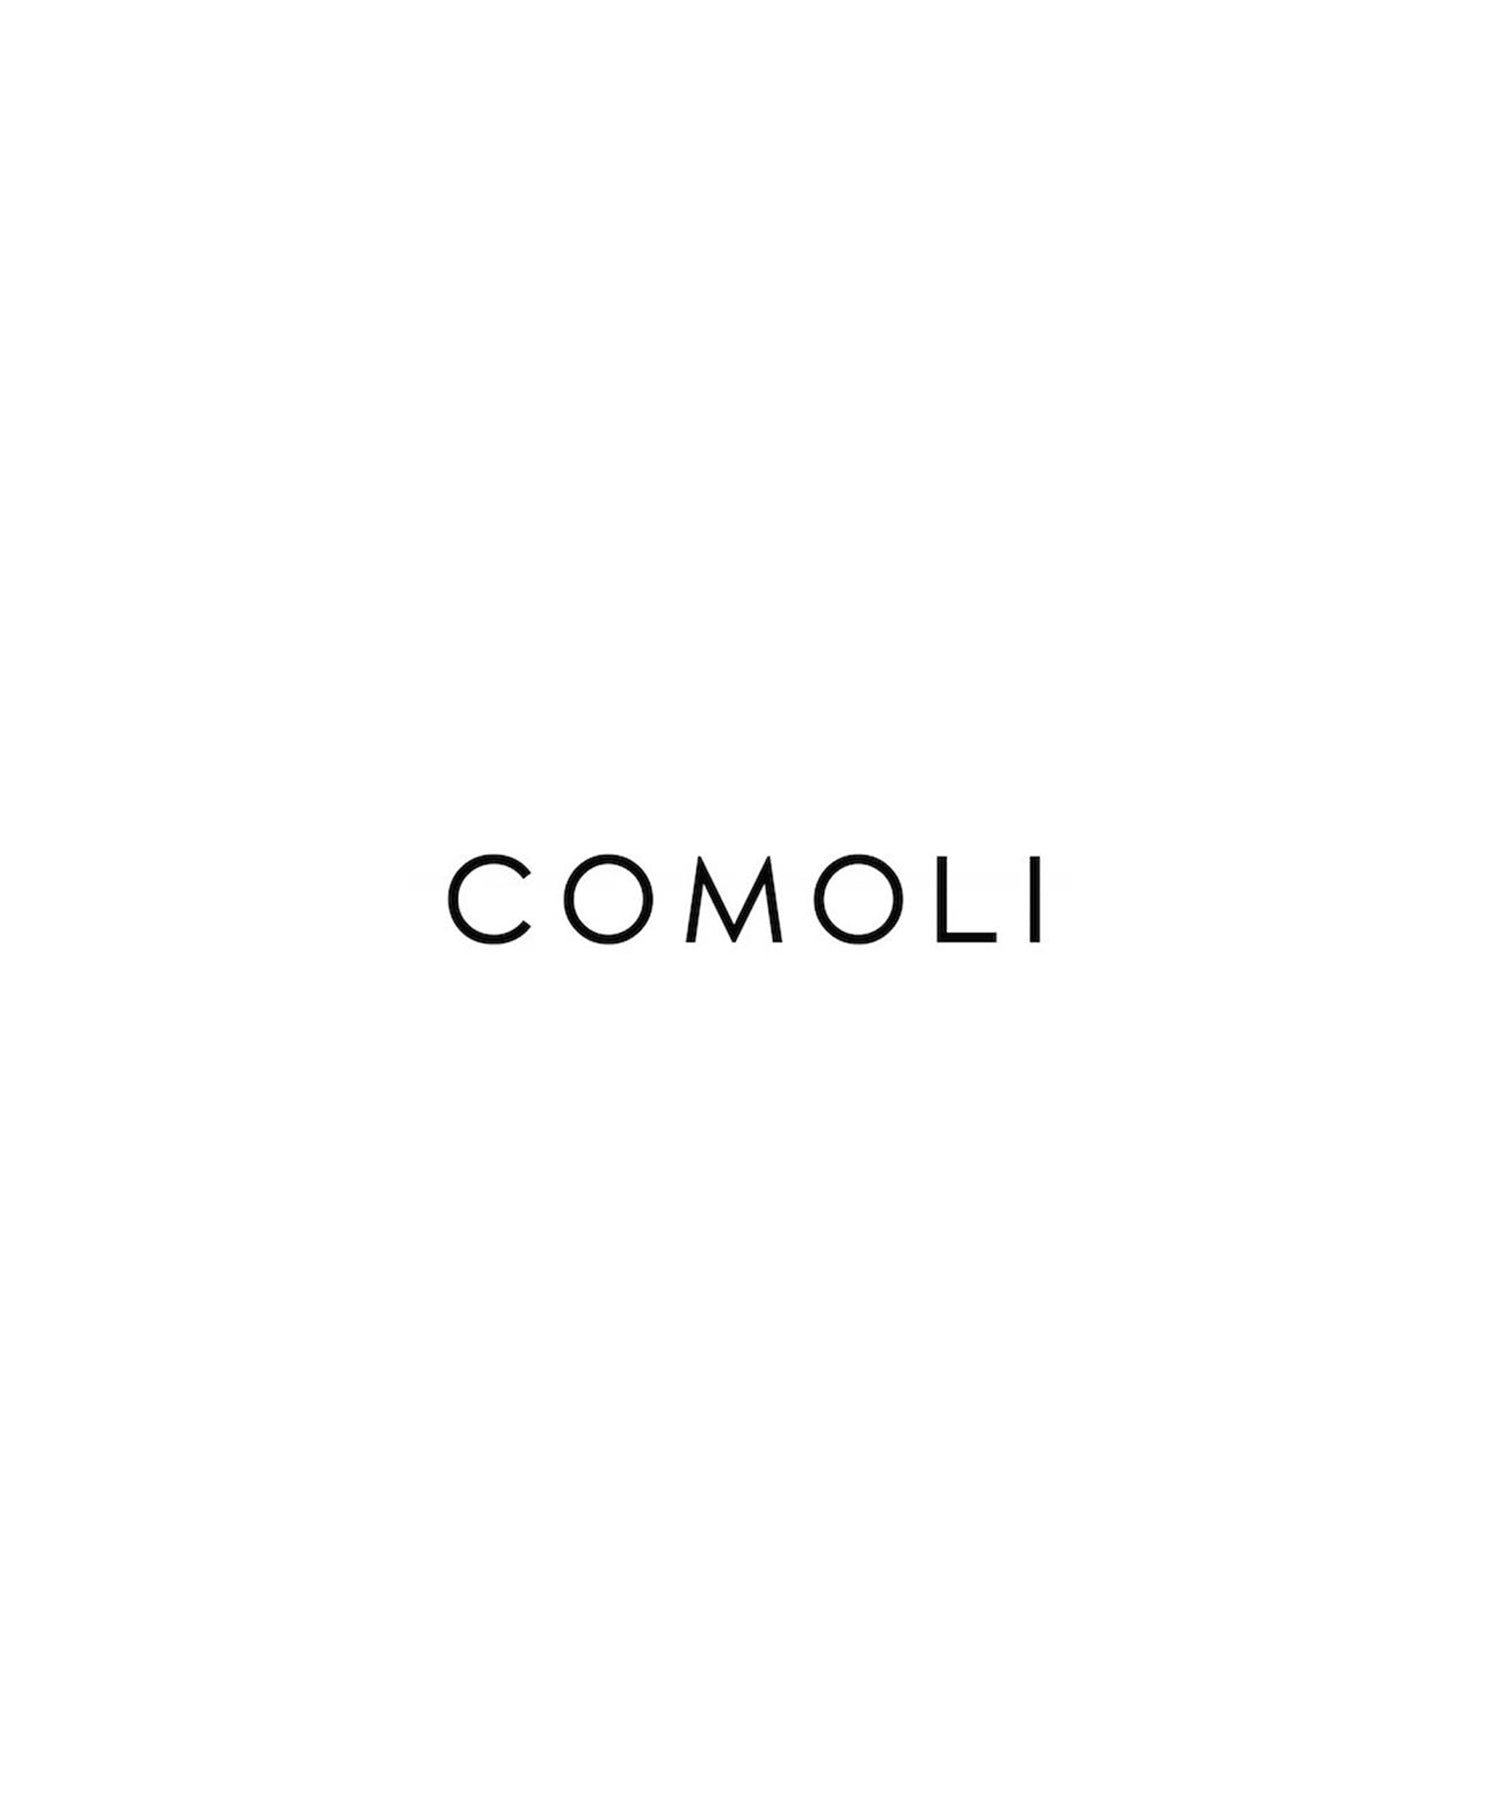 COMOLI 3月15日(金)発売の新作商品